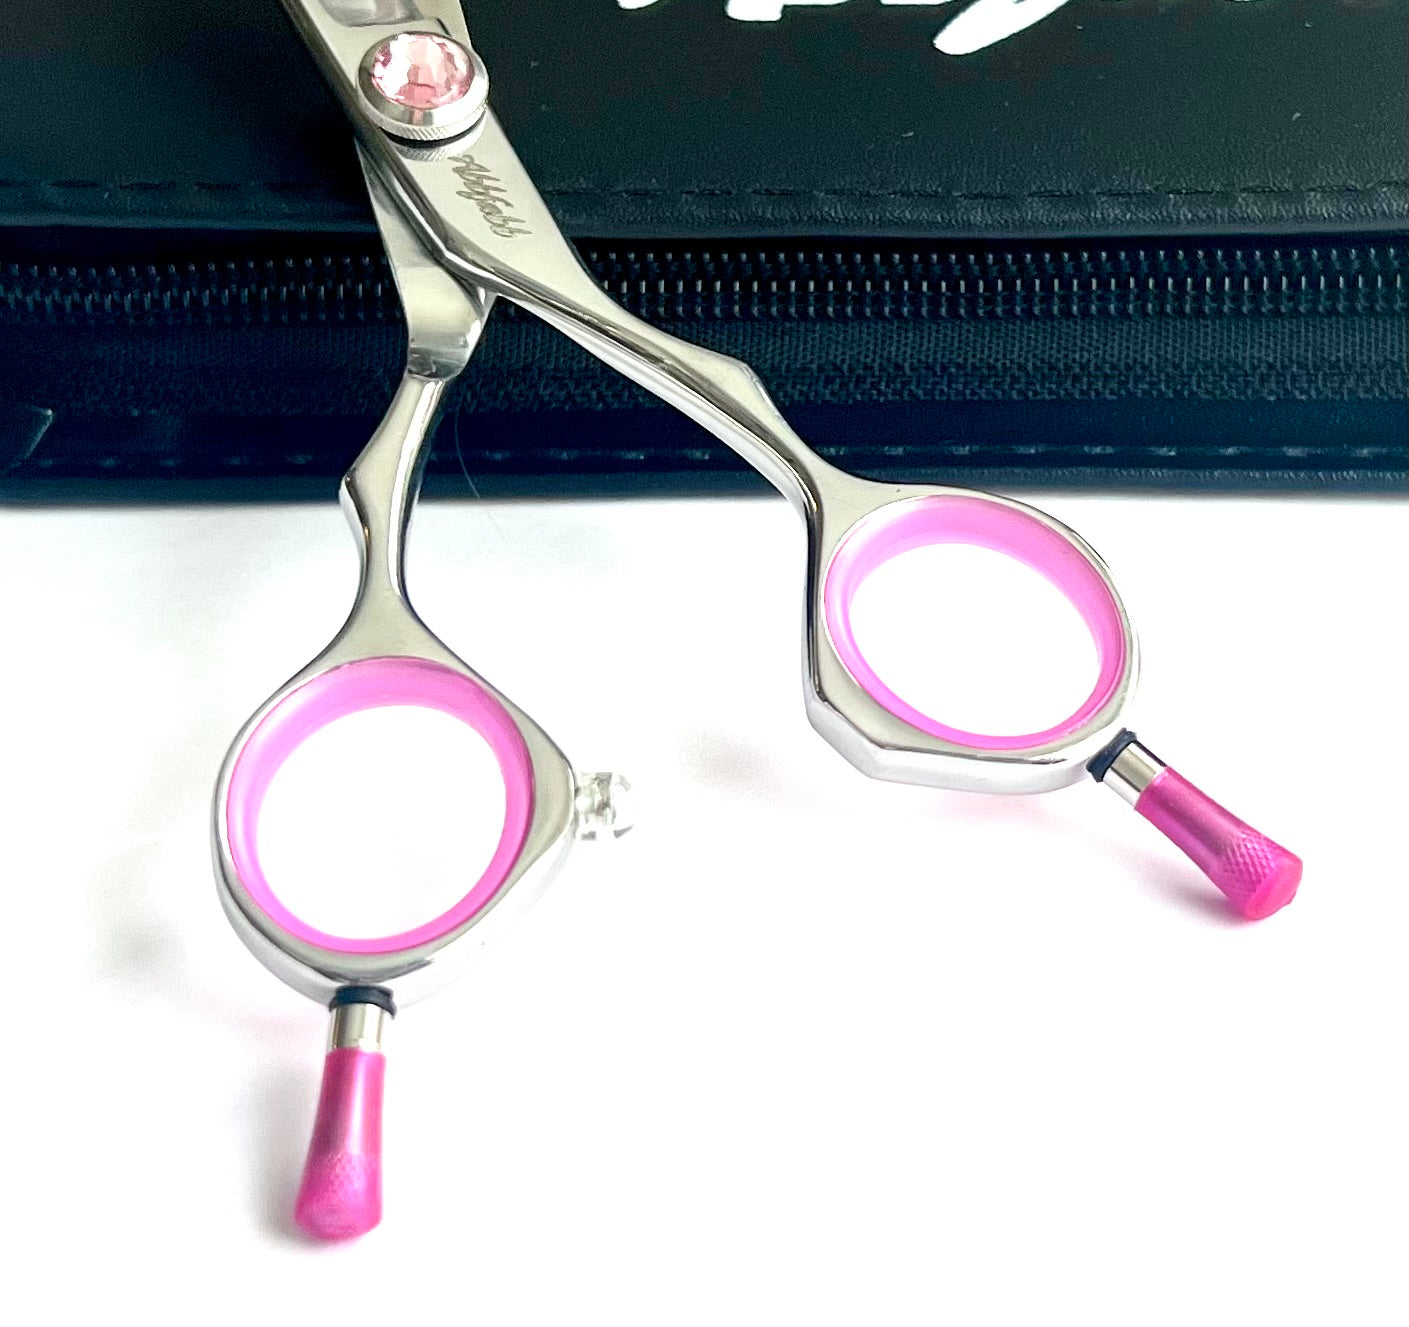 reversible curved dog grooming scissors-curved grooming shears-curved scissors for eyes-asian fusion grooming scissors